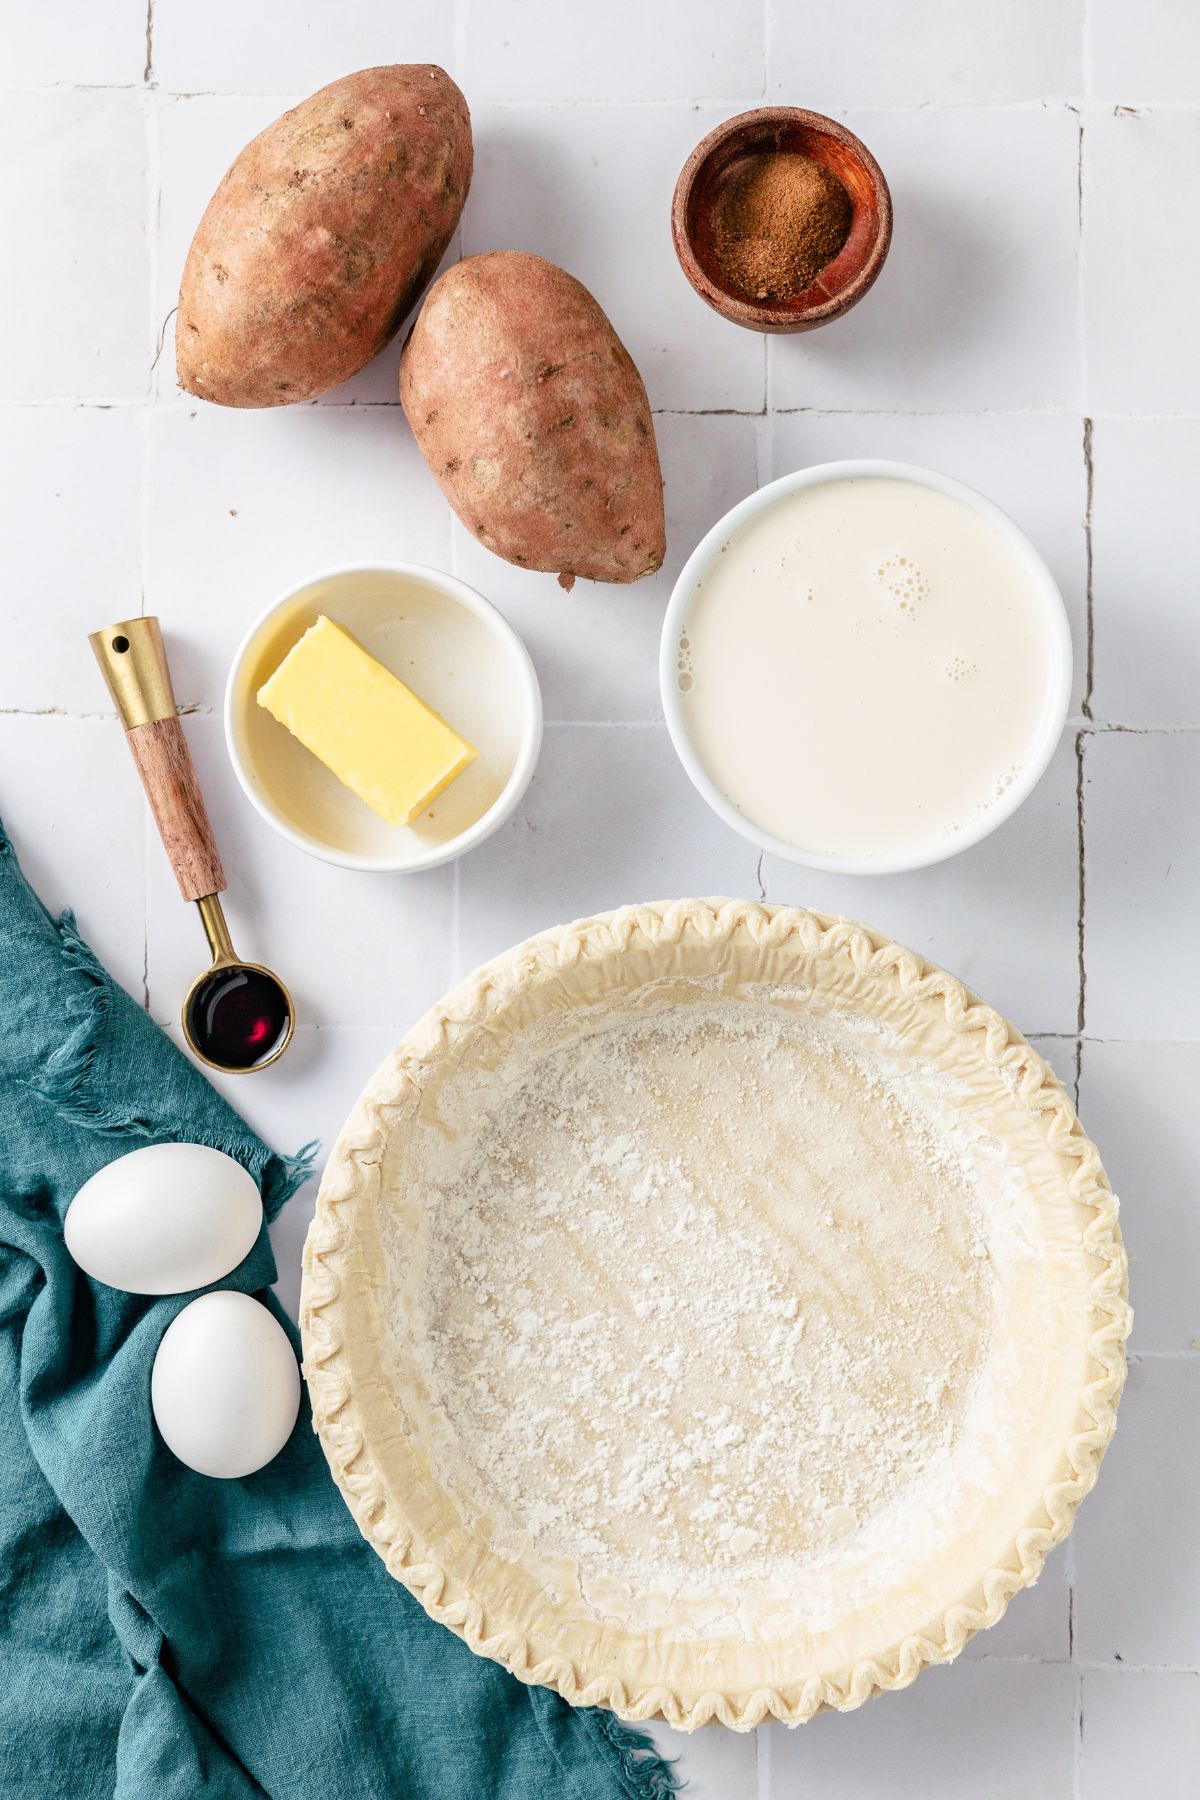 Pie crust, Sweet potatoes, Butter, Sweetened condensed milk, Eggs, Cinnamon, Ground nutmeg, Vanilla extract on separate bowls